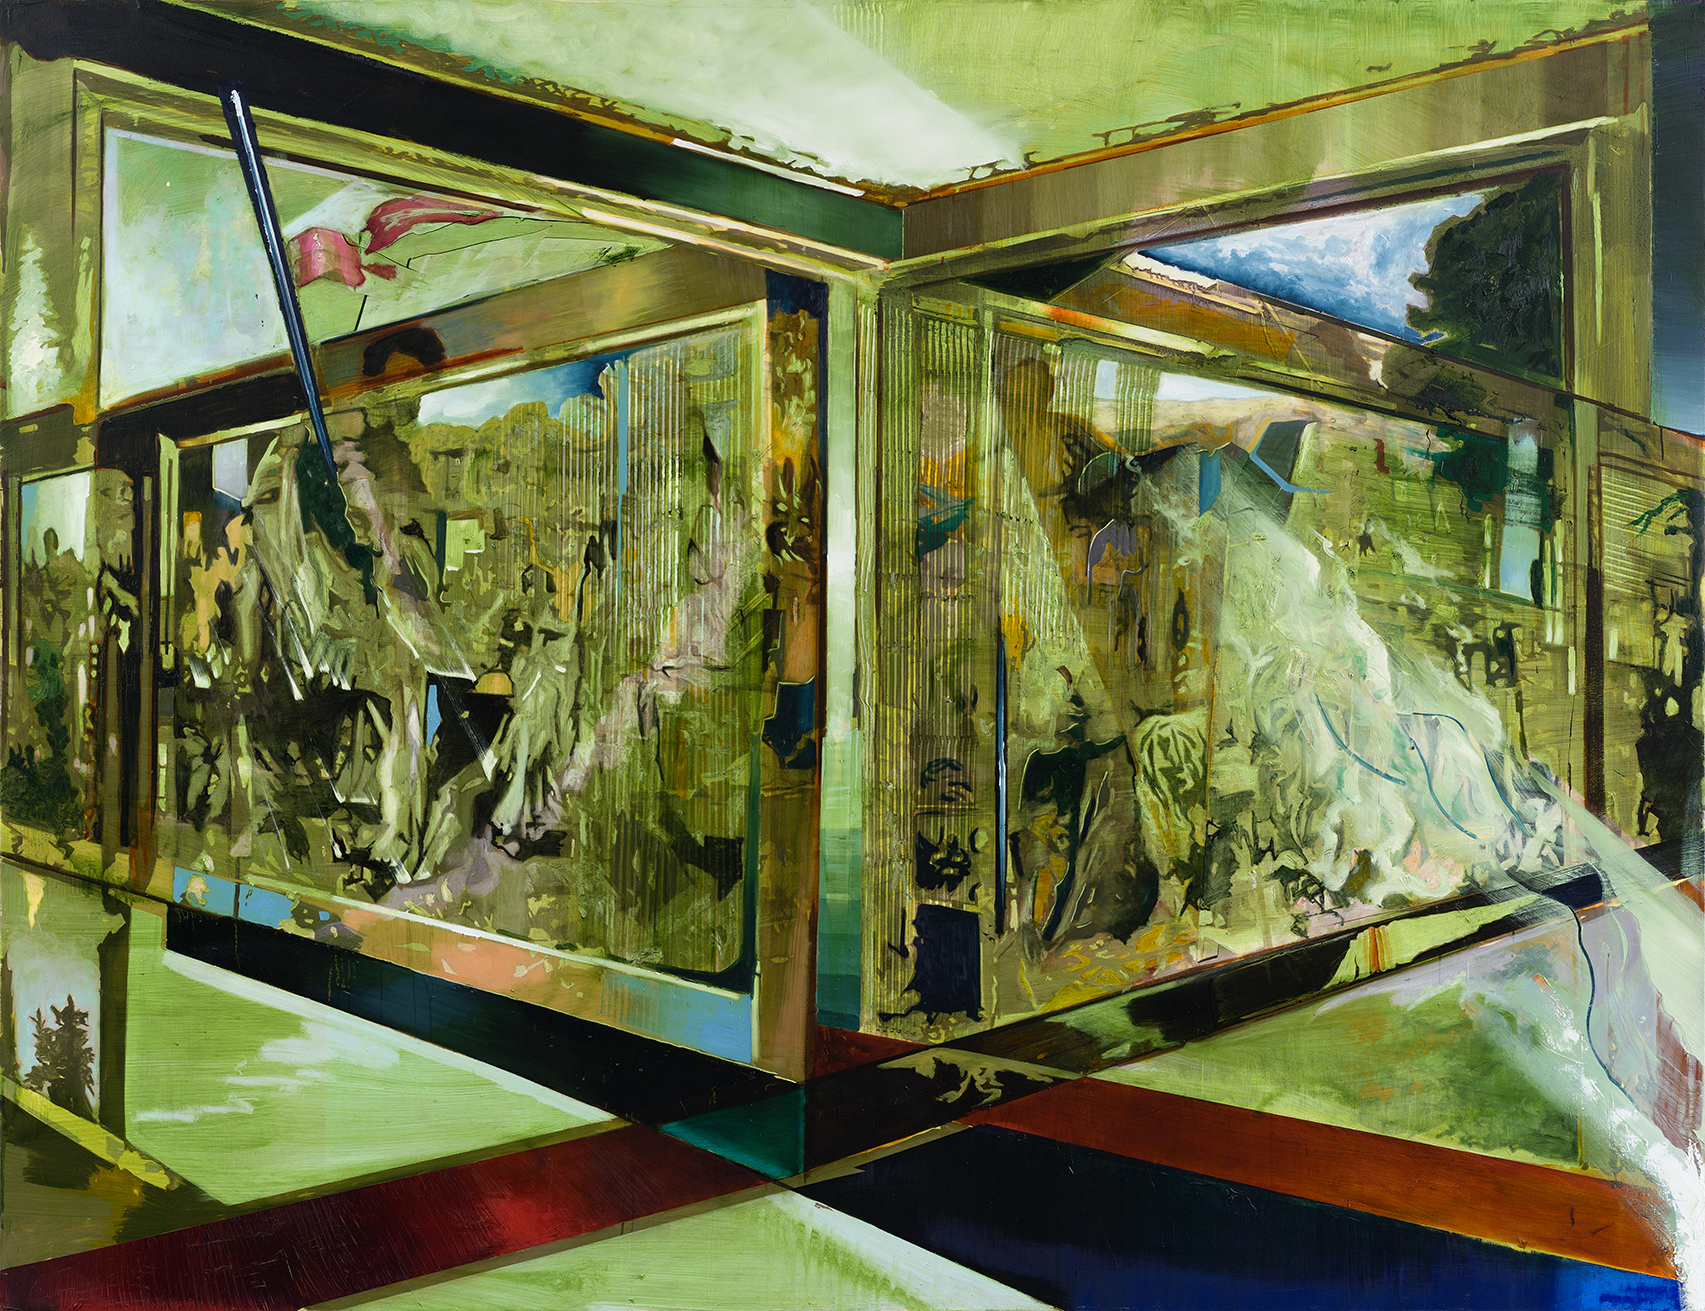 Oren Eliav, Transfiguration, 2014, oil on canvas, 200 x 260 cm